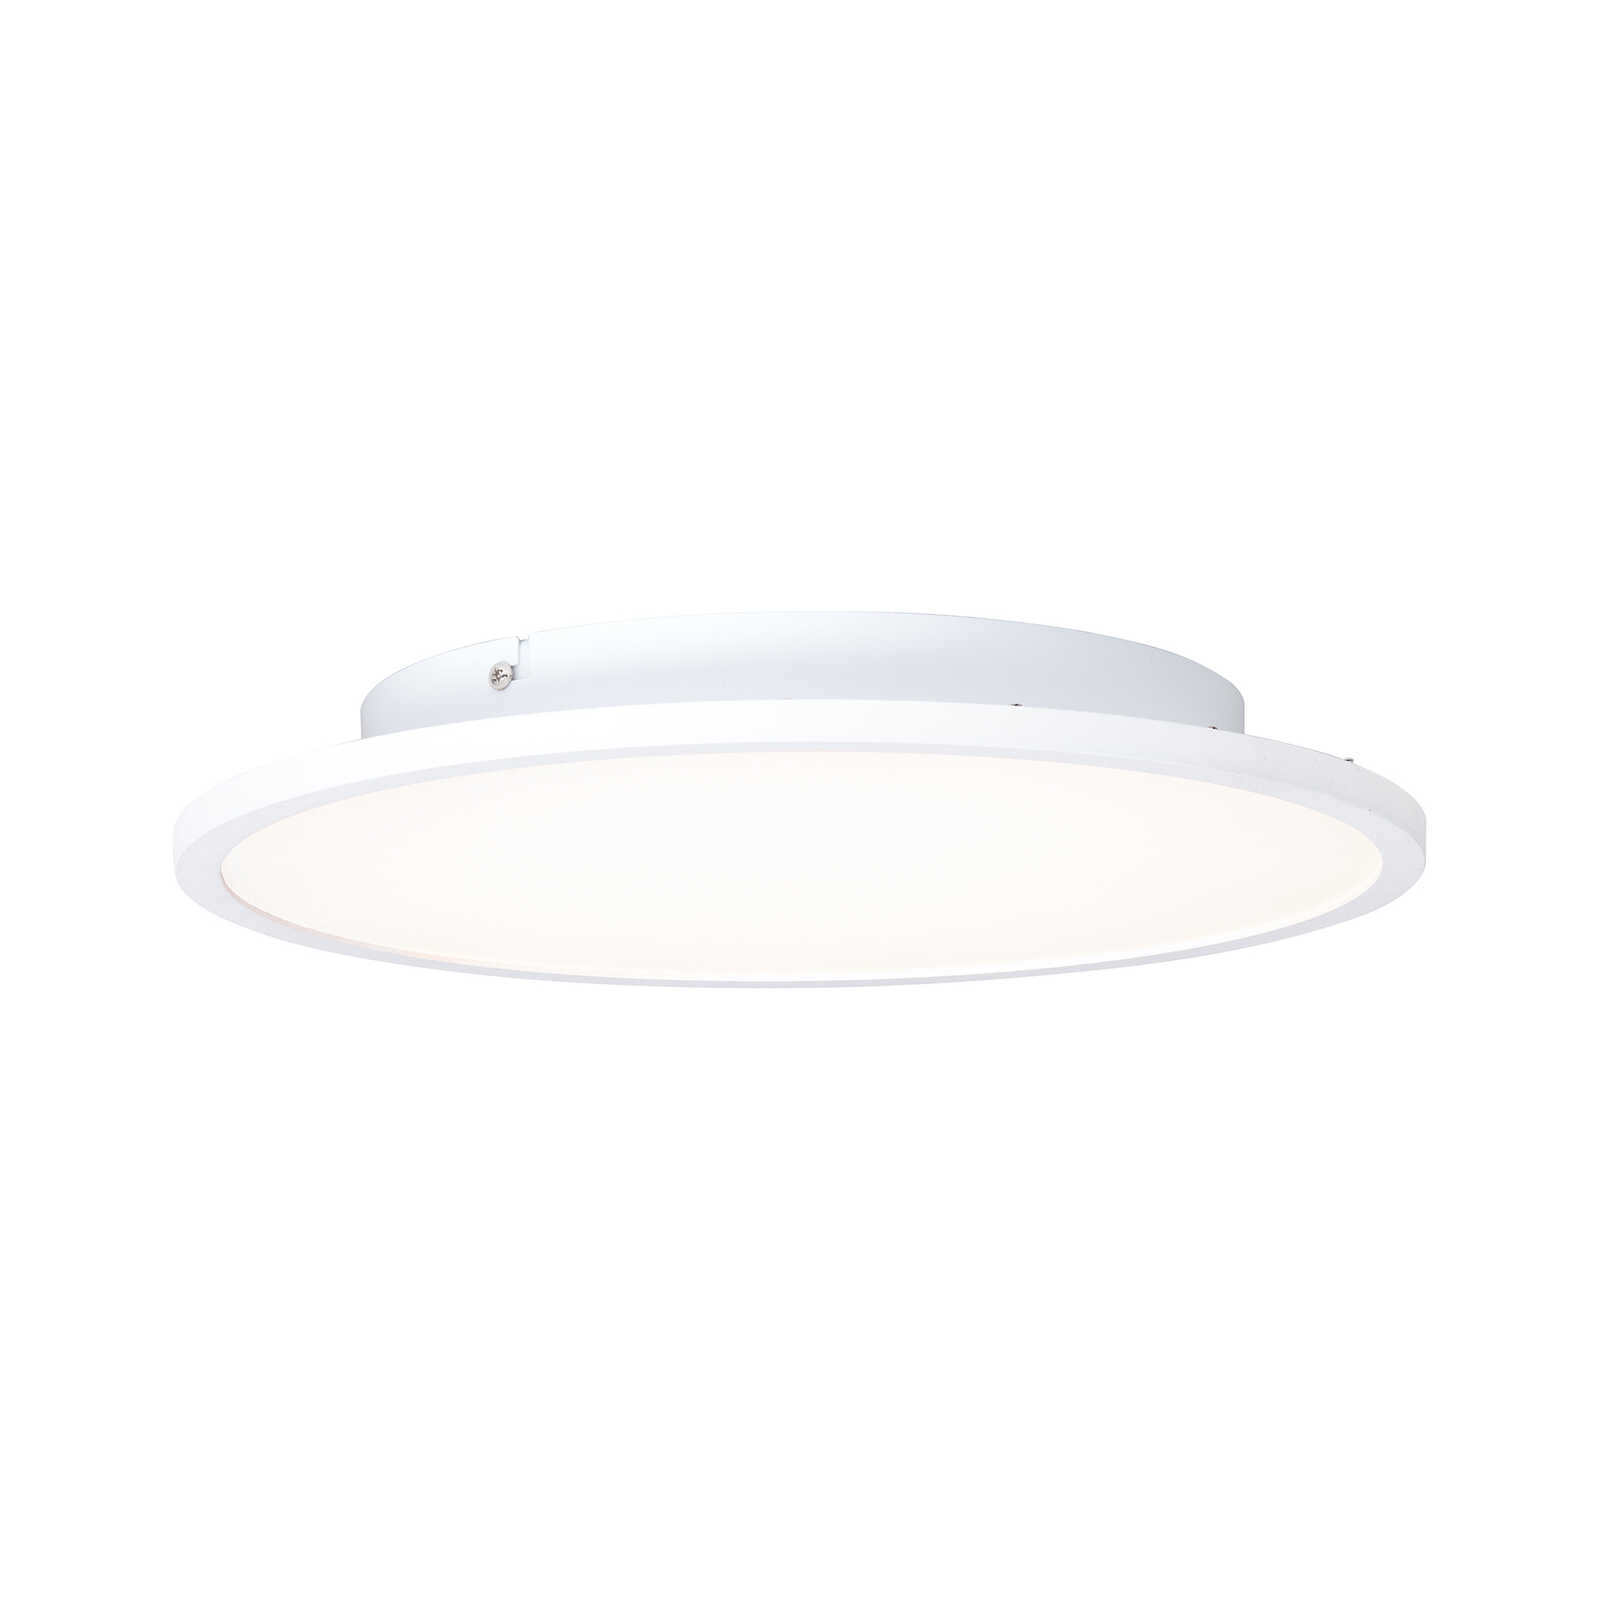 Plastic ceiling light - Constantin 4 - White
